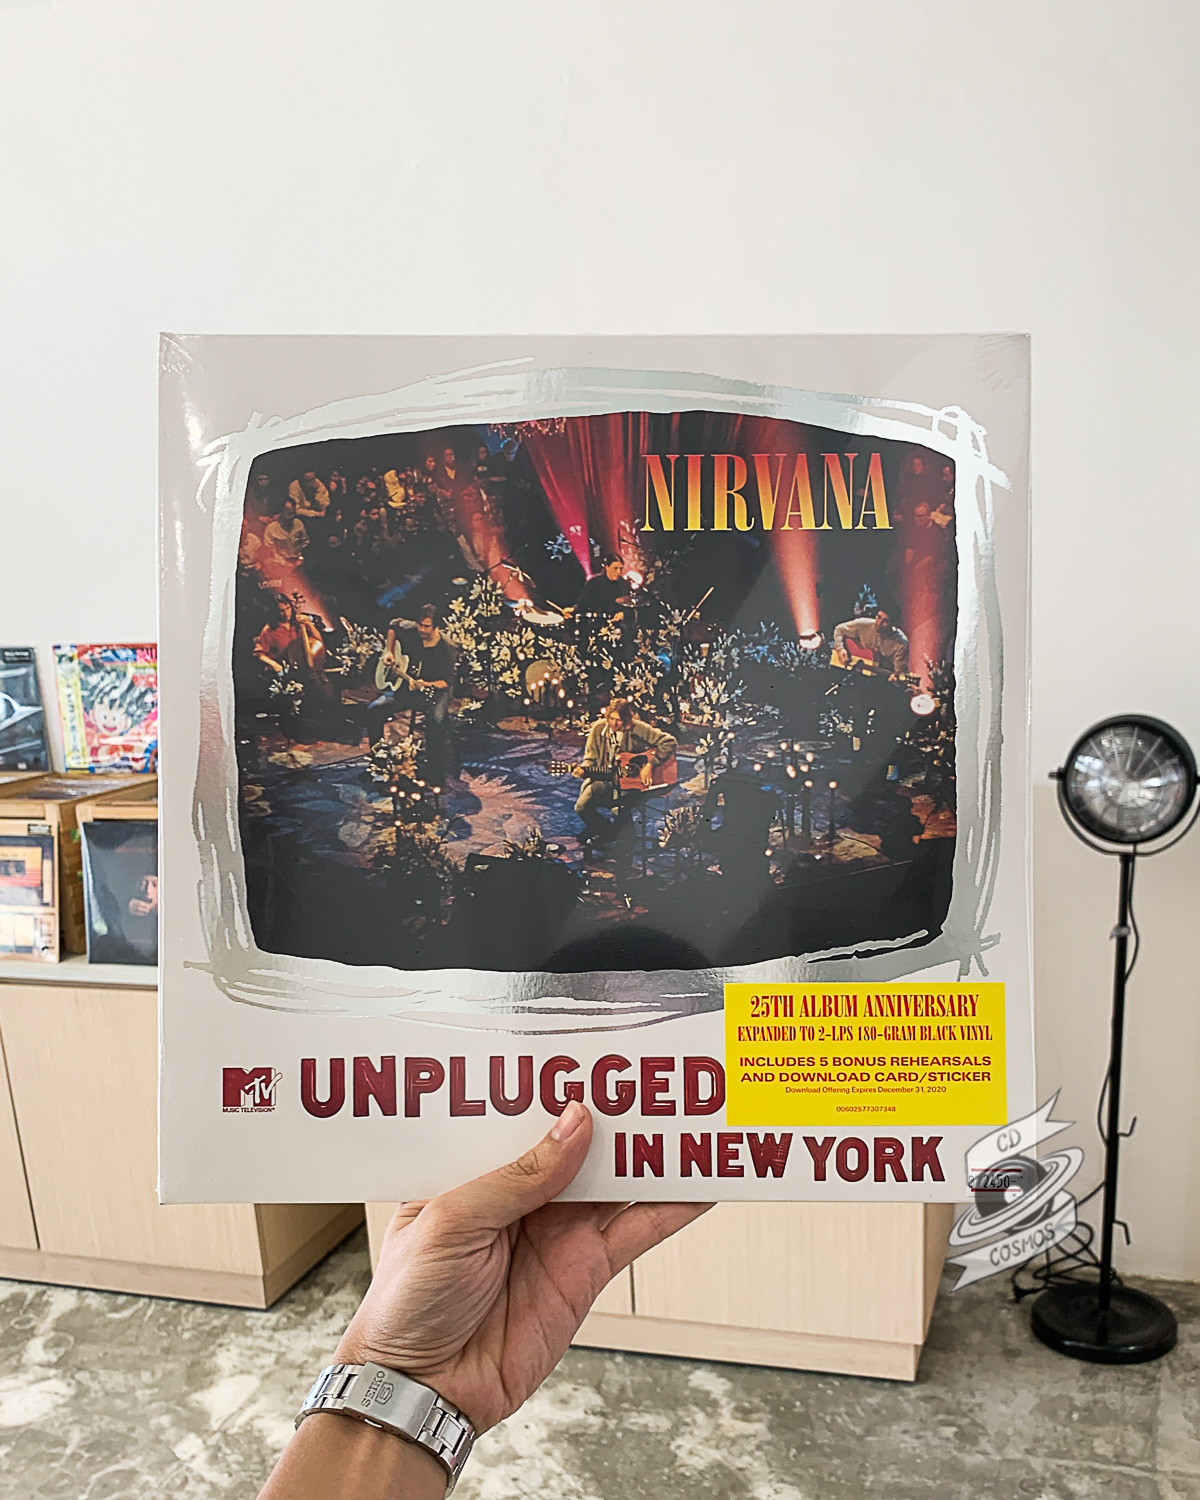 MTV Unplugged Exclusive Blue Vinyl